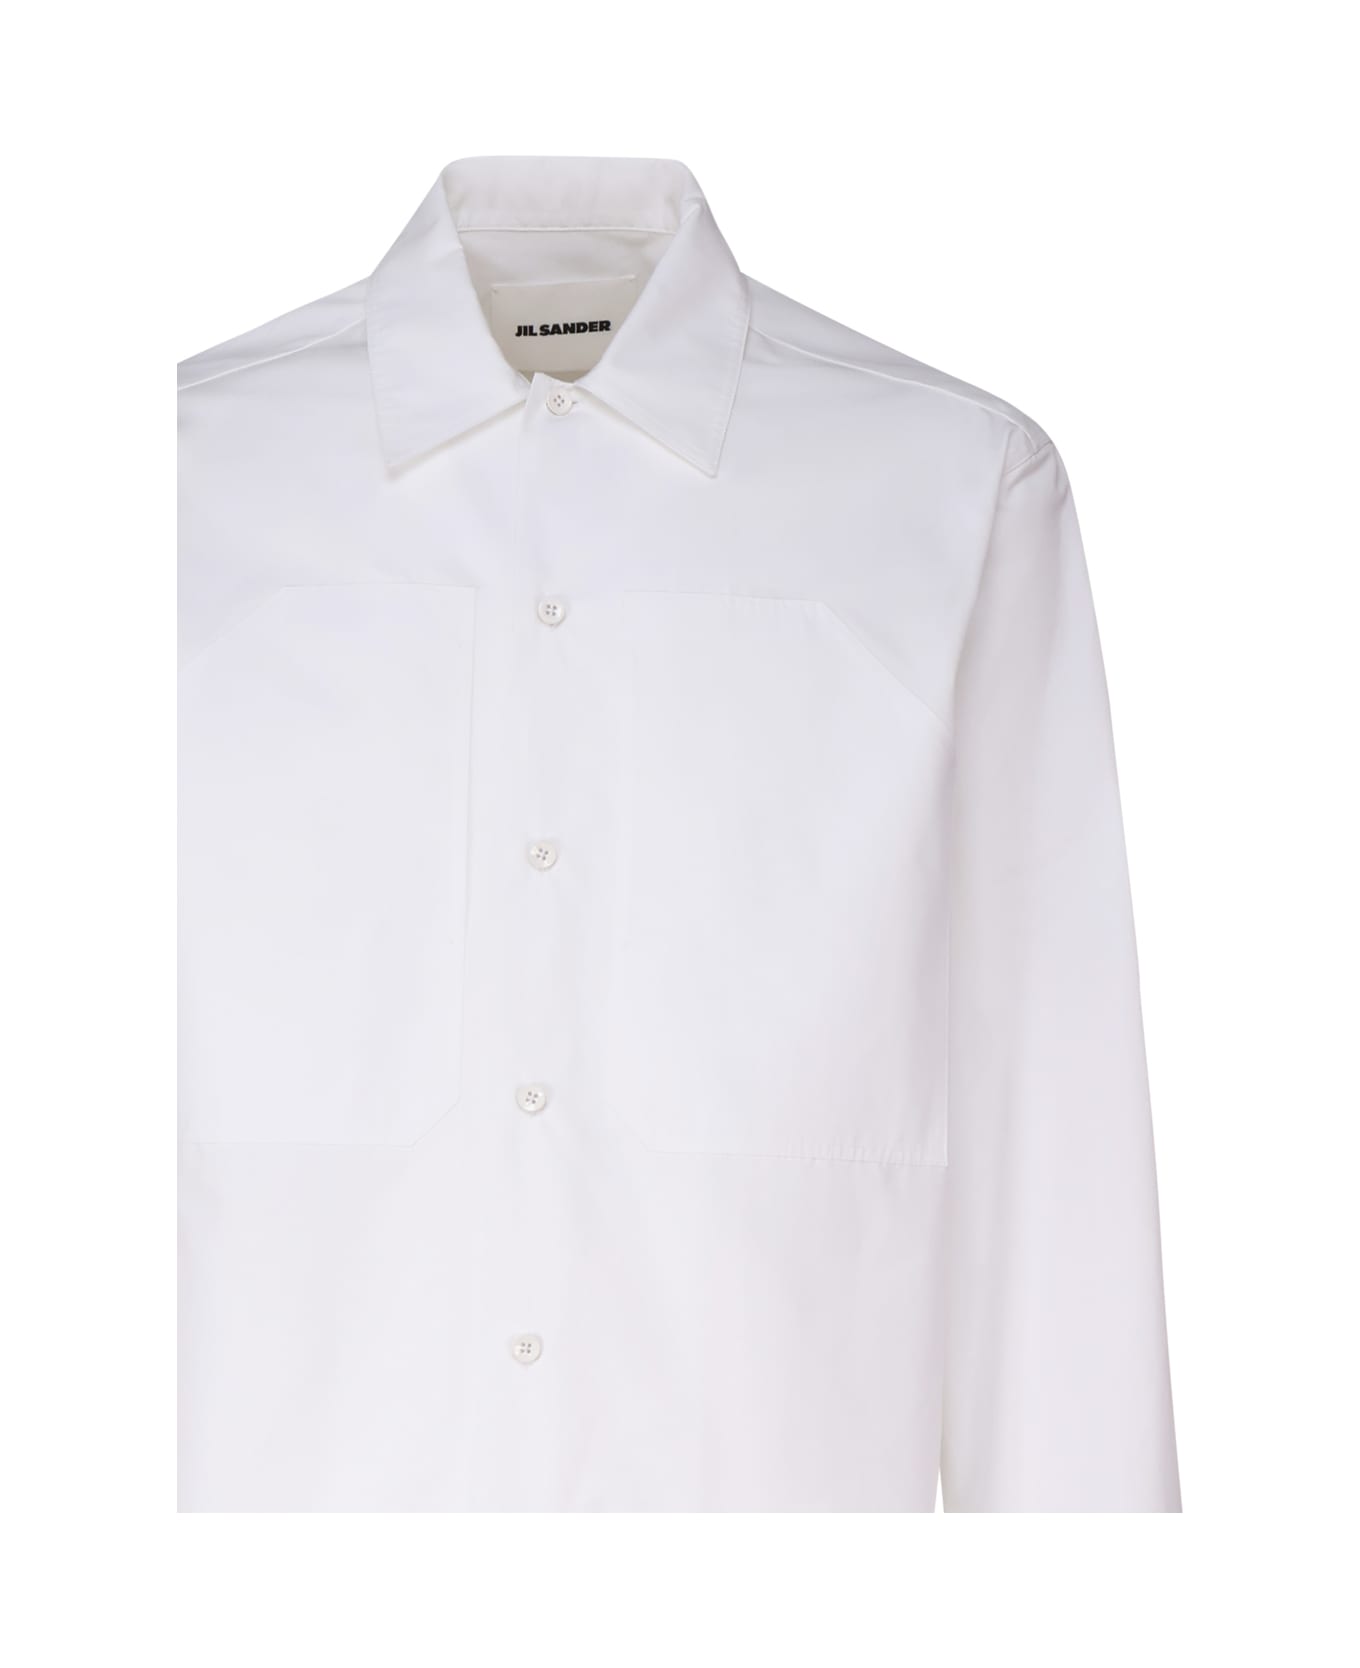 Jil Sander Shirt With Pocket - White